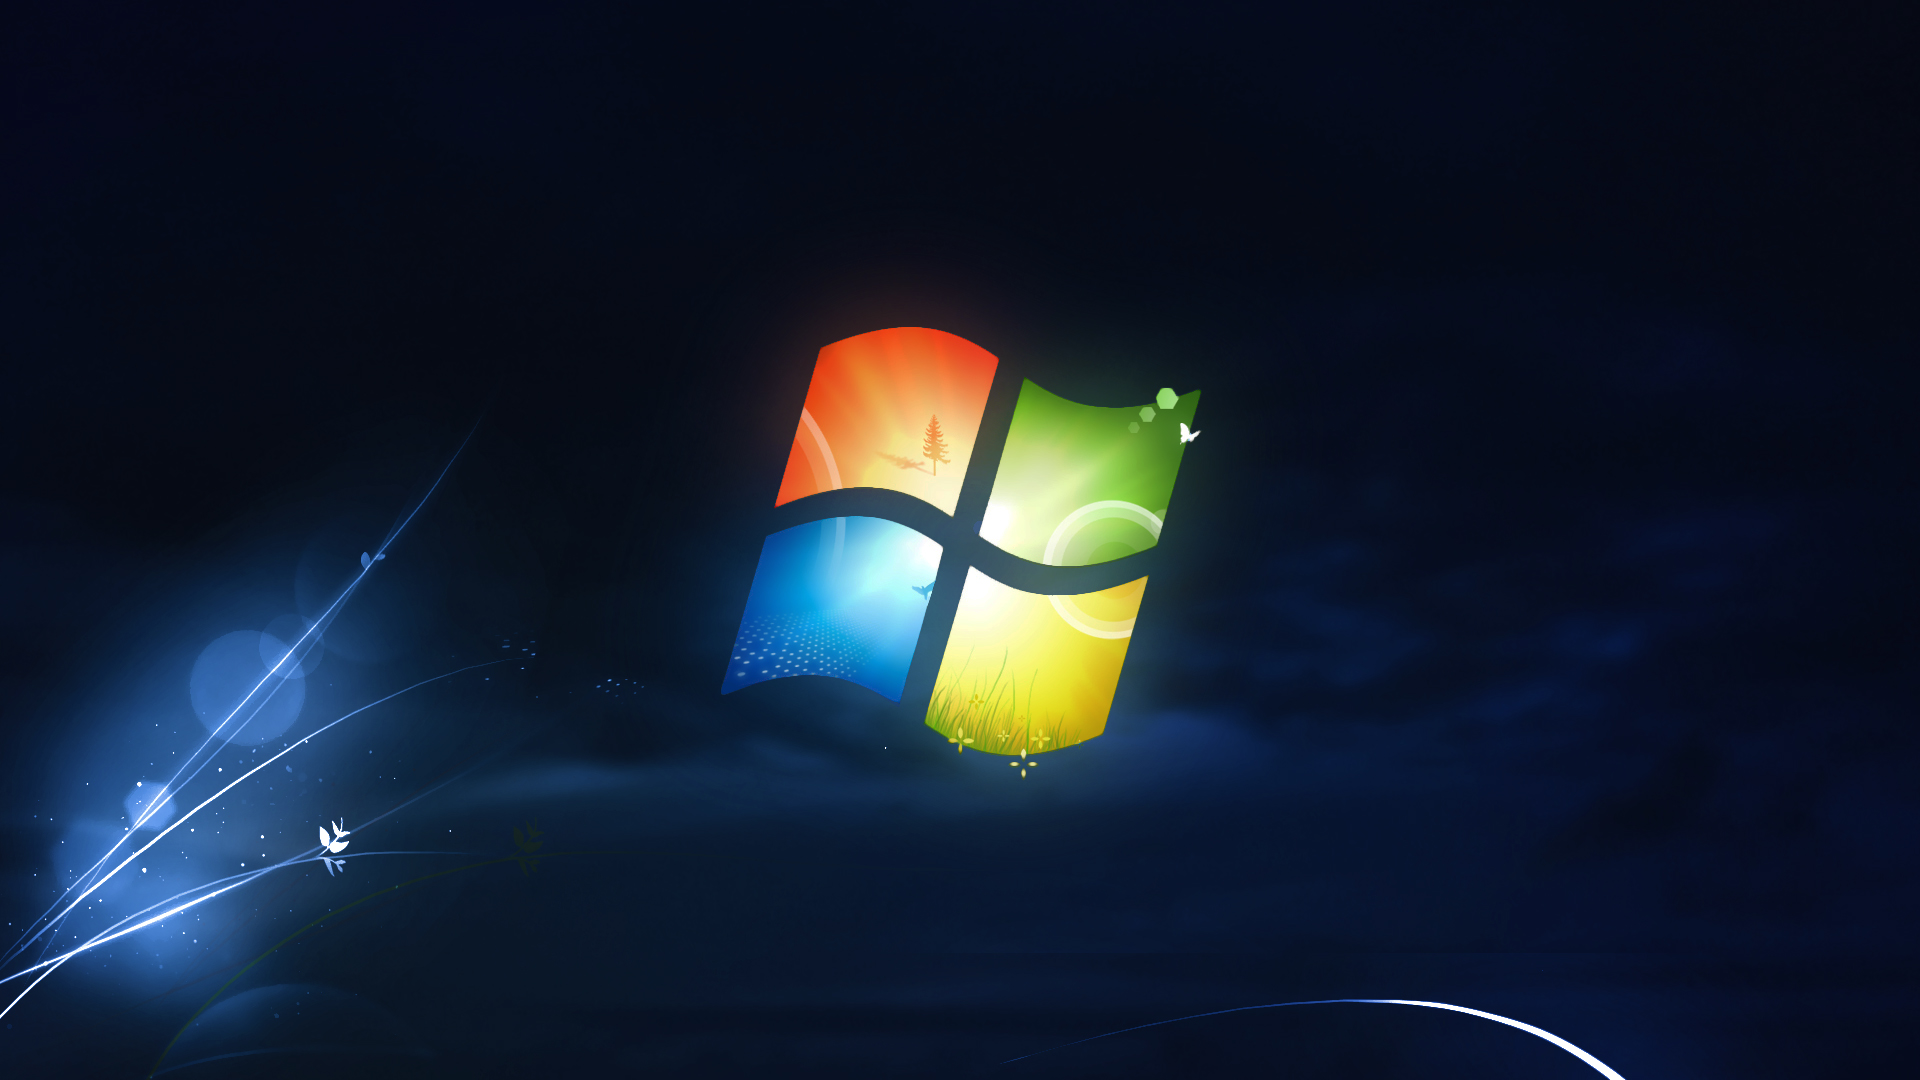 Microsoft Windows Wallpaper 1920x1080 Microsoft Windows Logos